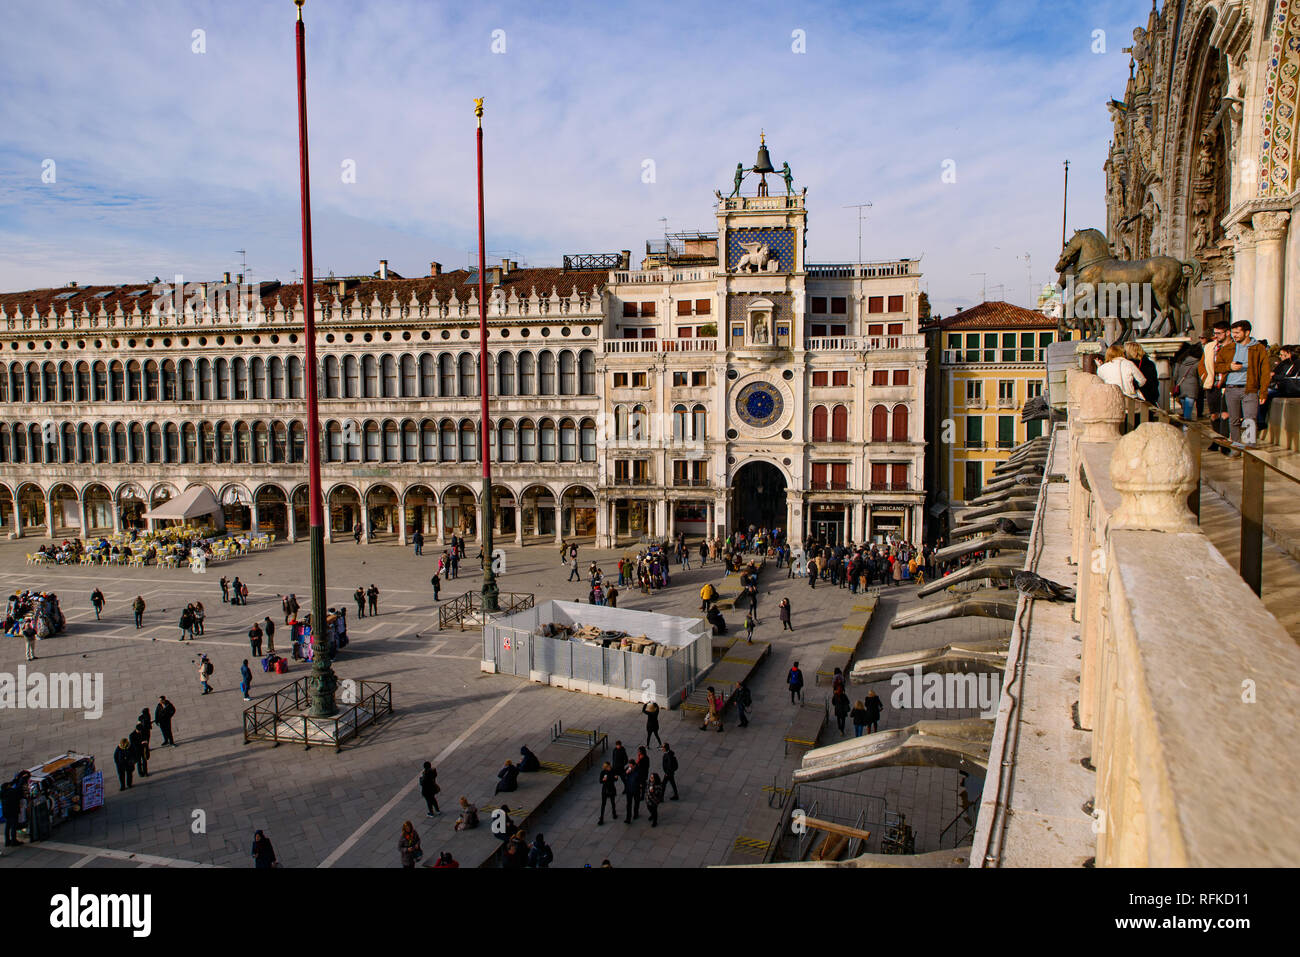 St Mark's Square (Piazza San Marco), Venice, Italy Stock Photo